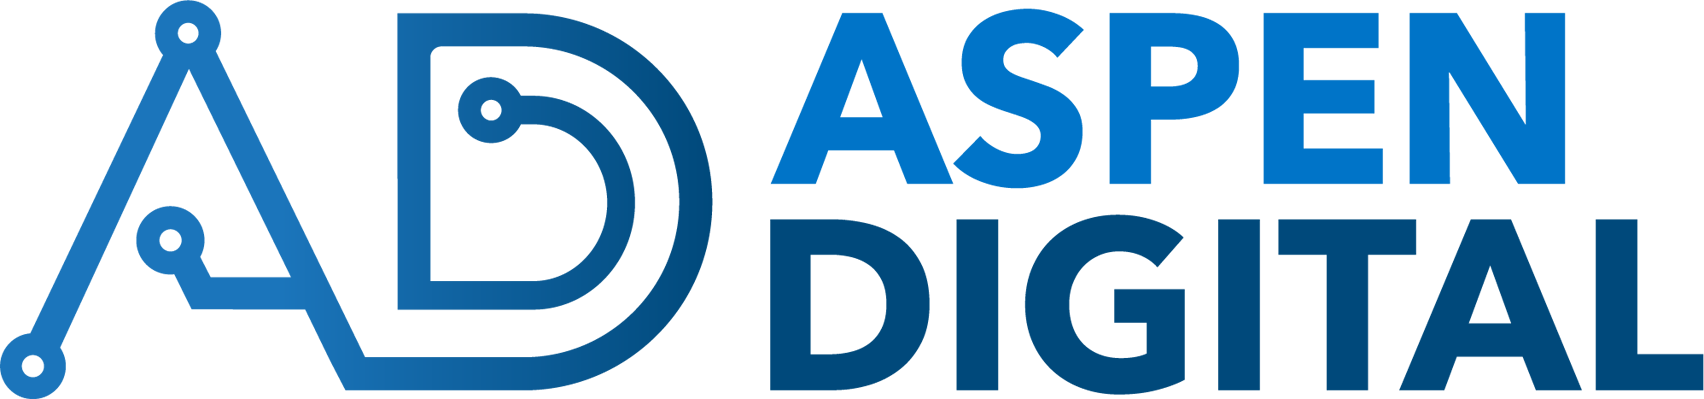 aspen-digital-logo-medium.png